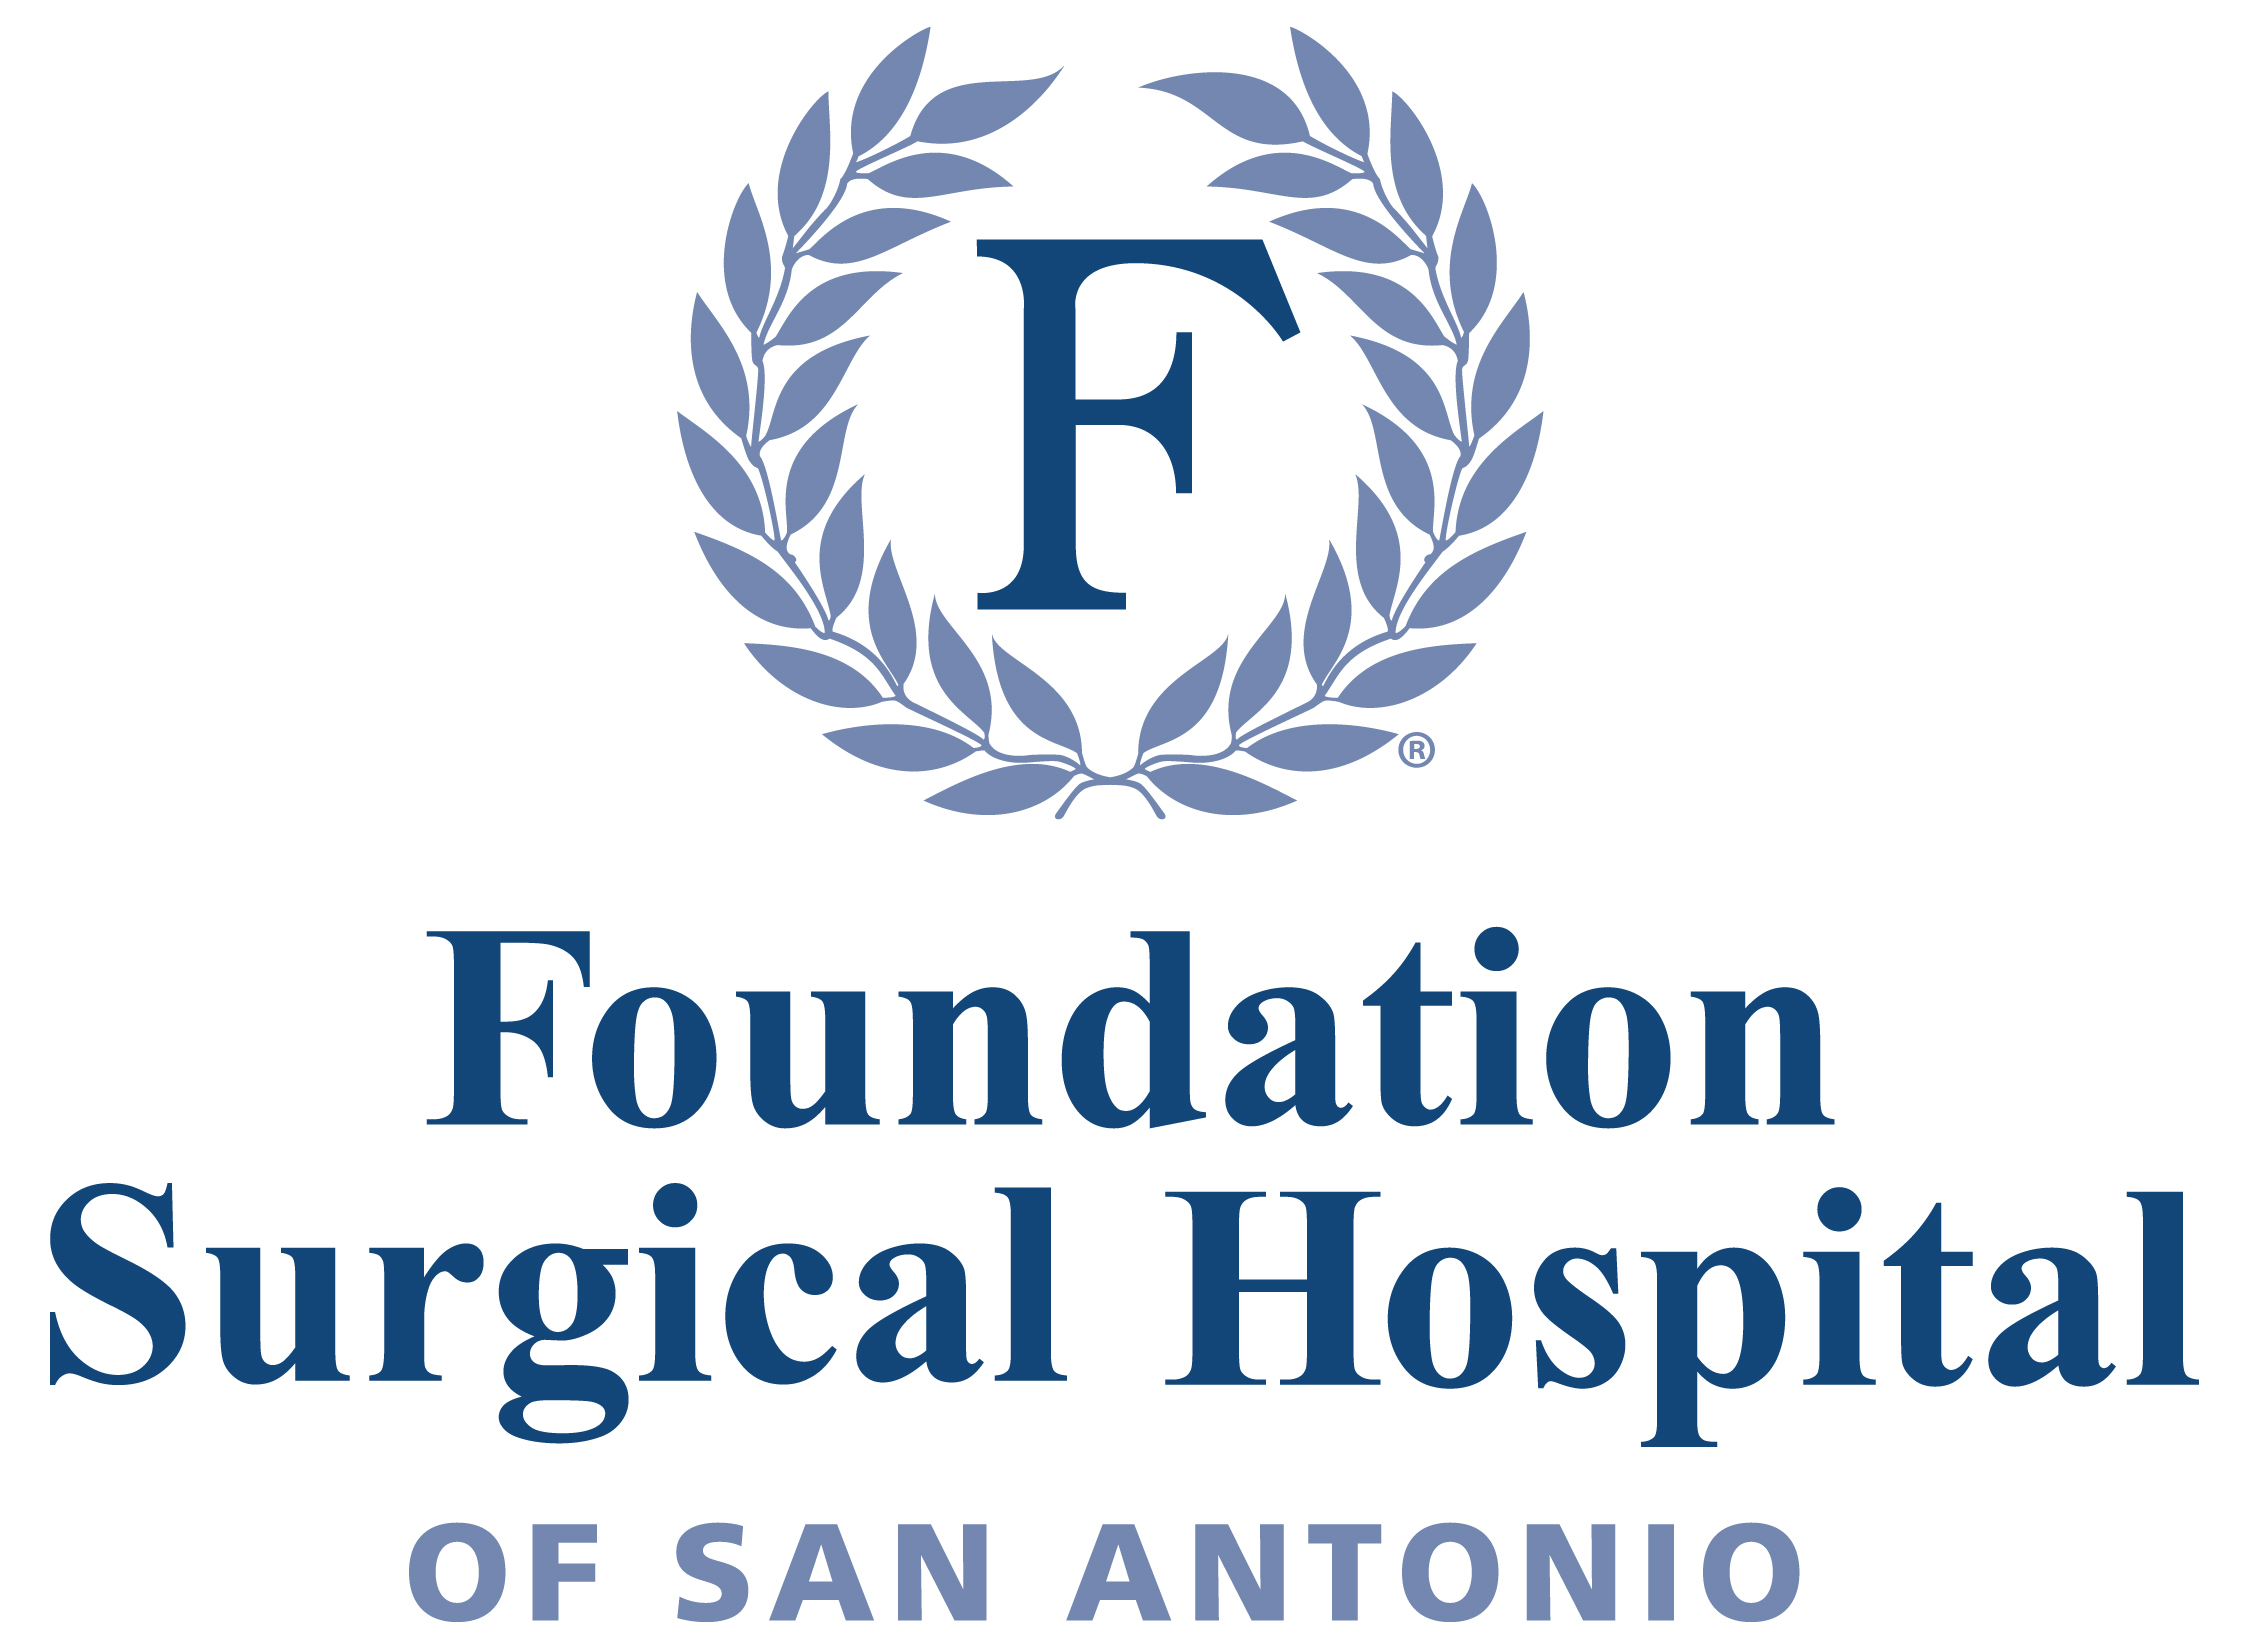 Foundation Surgical Hospital of San Antonio